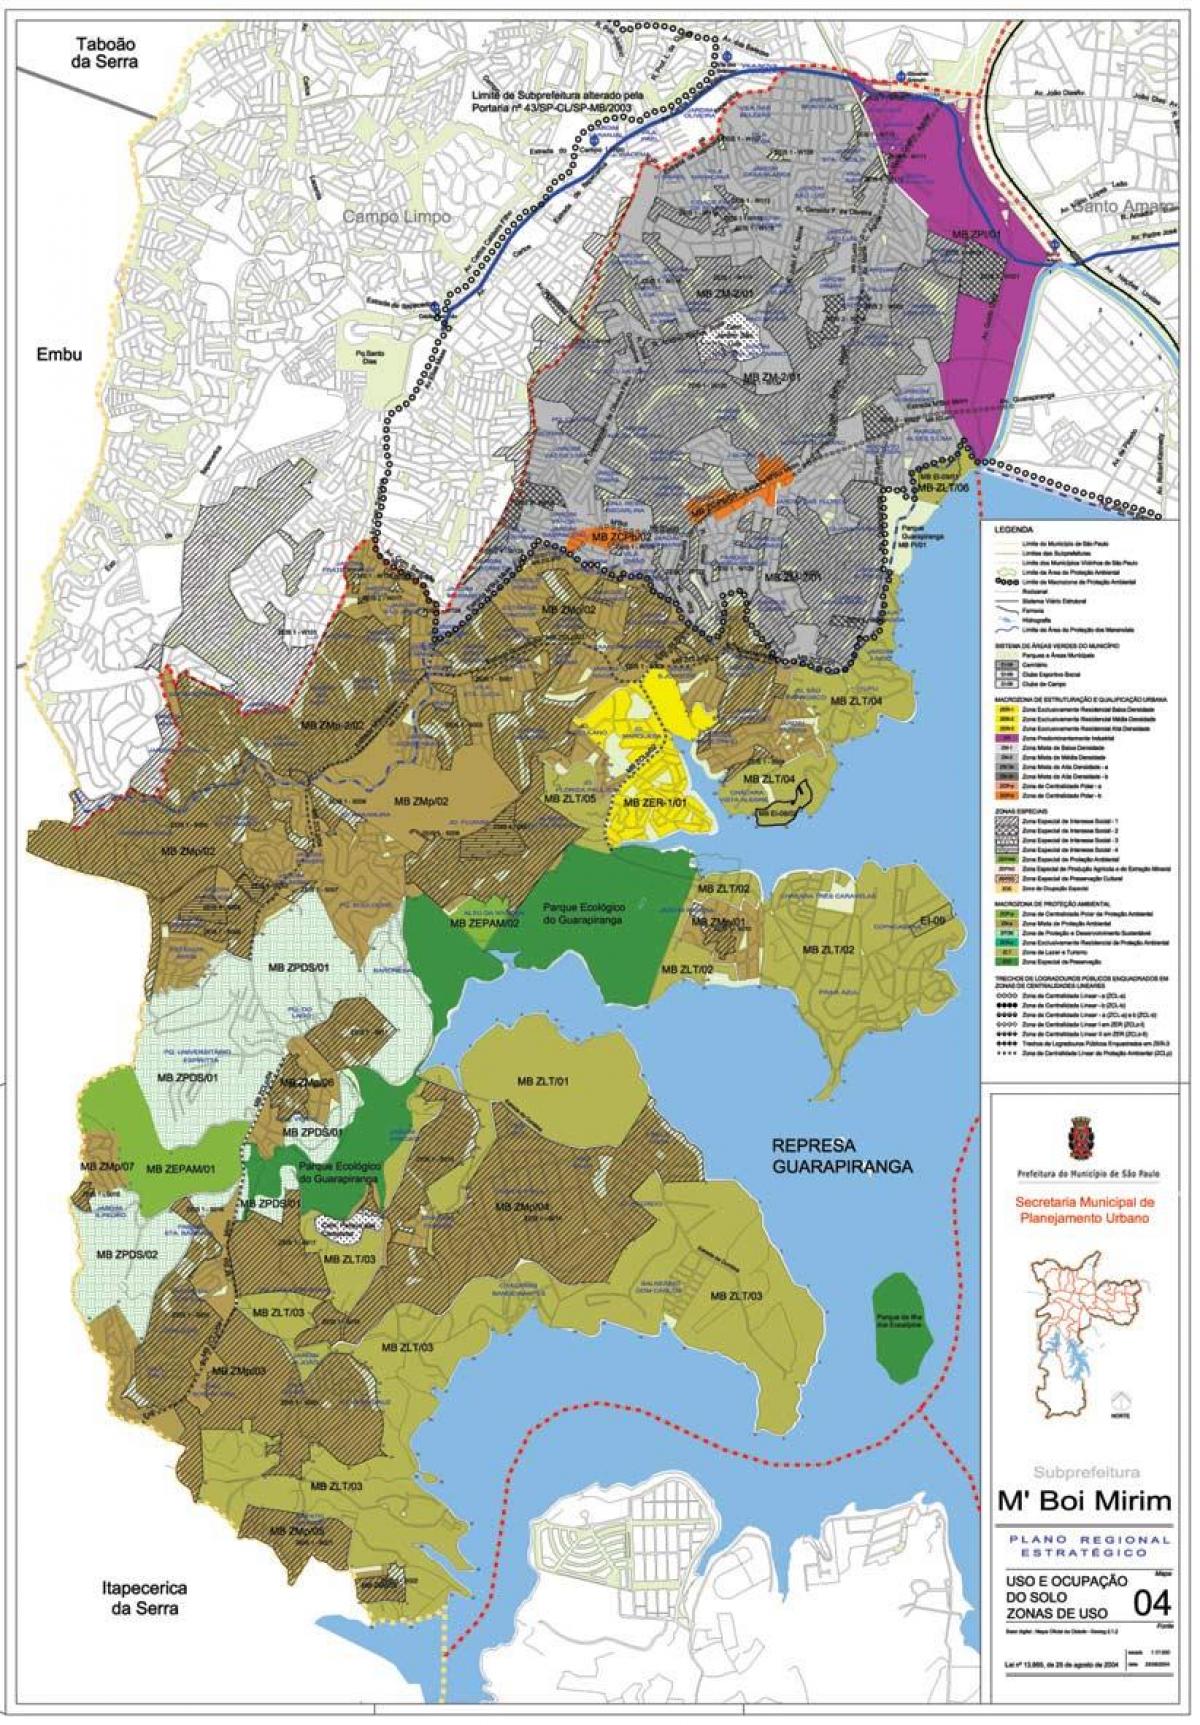 Mapa ng M'Boi Mirim São Paulo - Okupasyon ng lupa